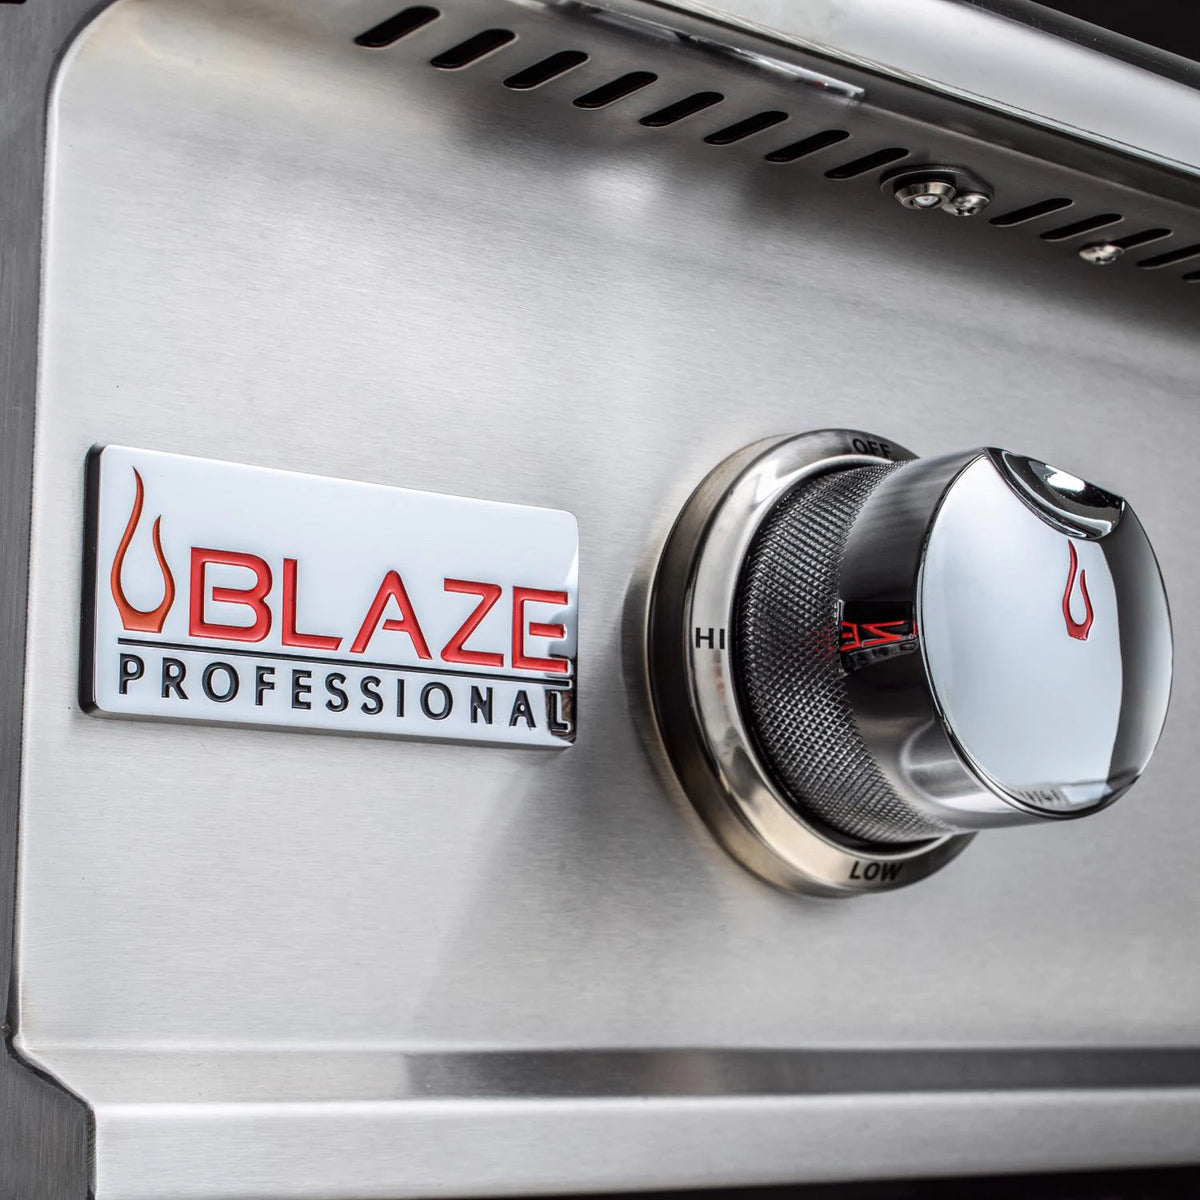 Blaze Professional 3 Burner 34 Inch Grill Contoured Control Panel